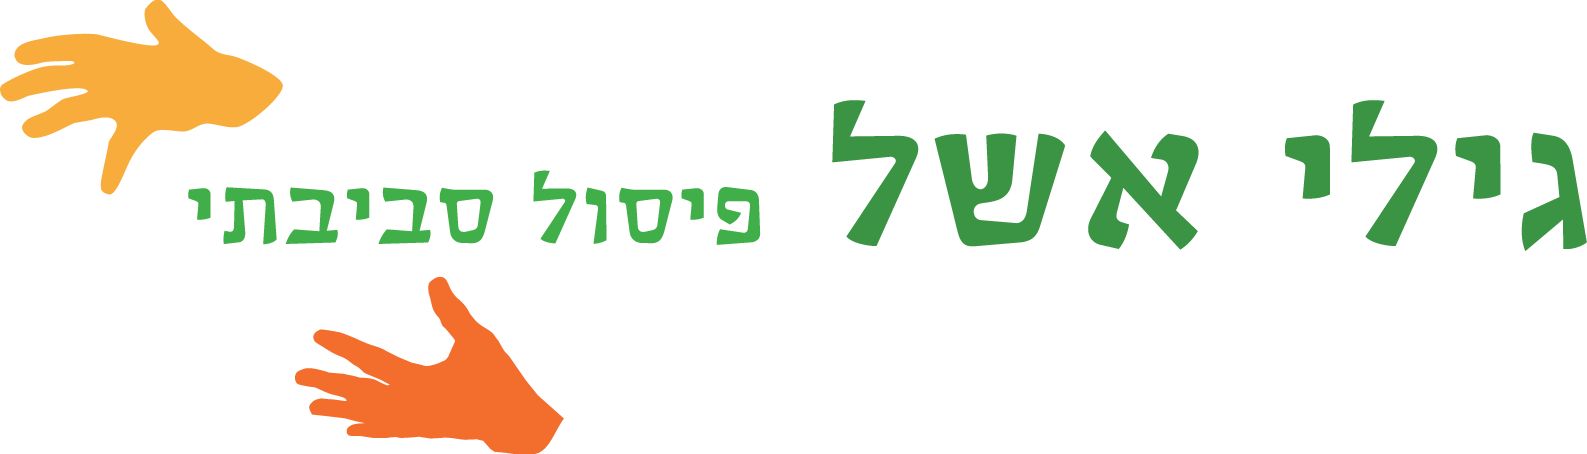 cropped-לוגו-עברית-חדש.png